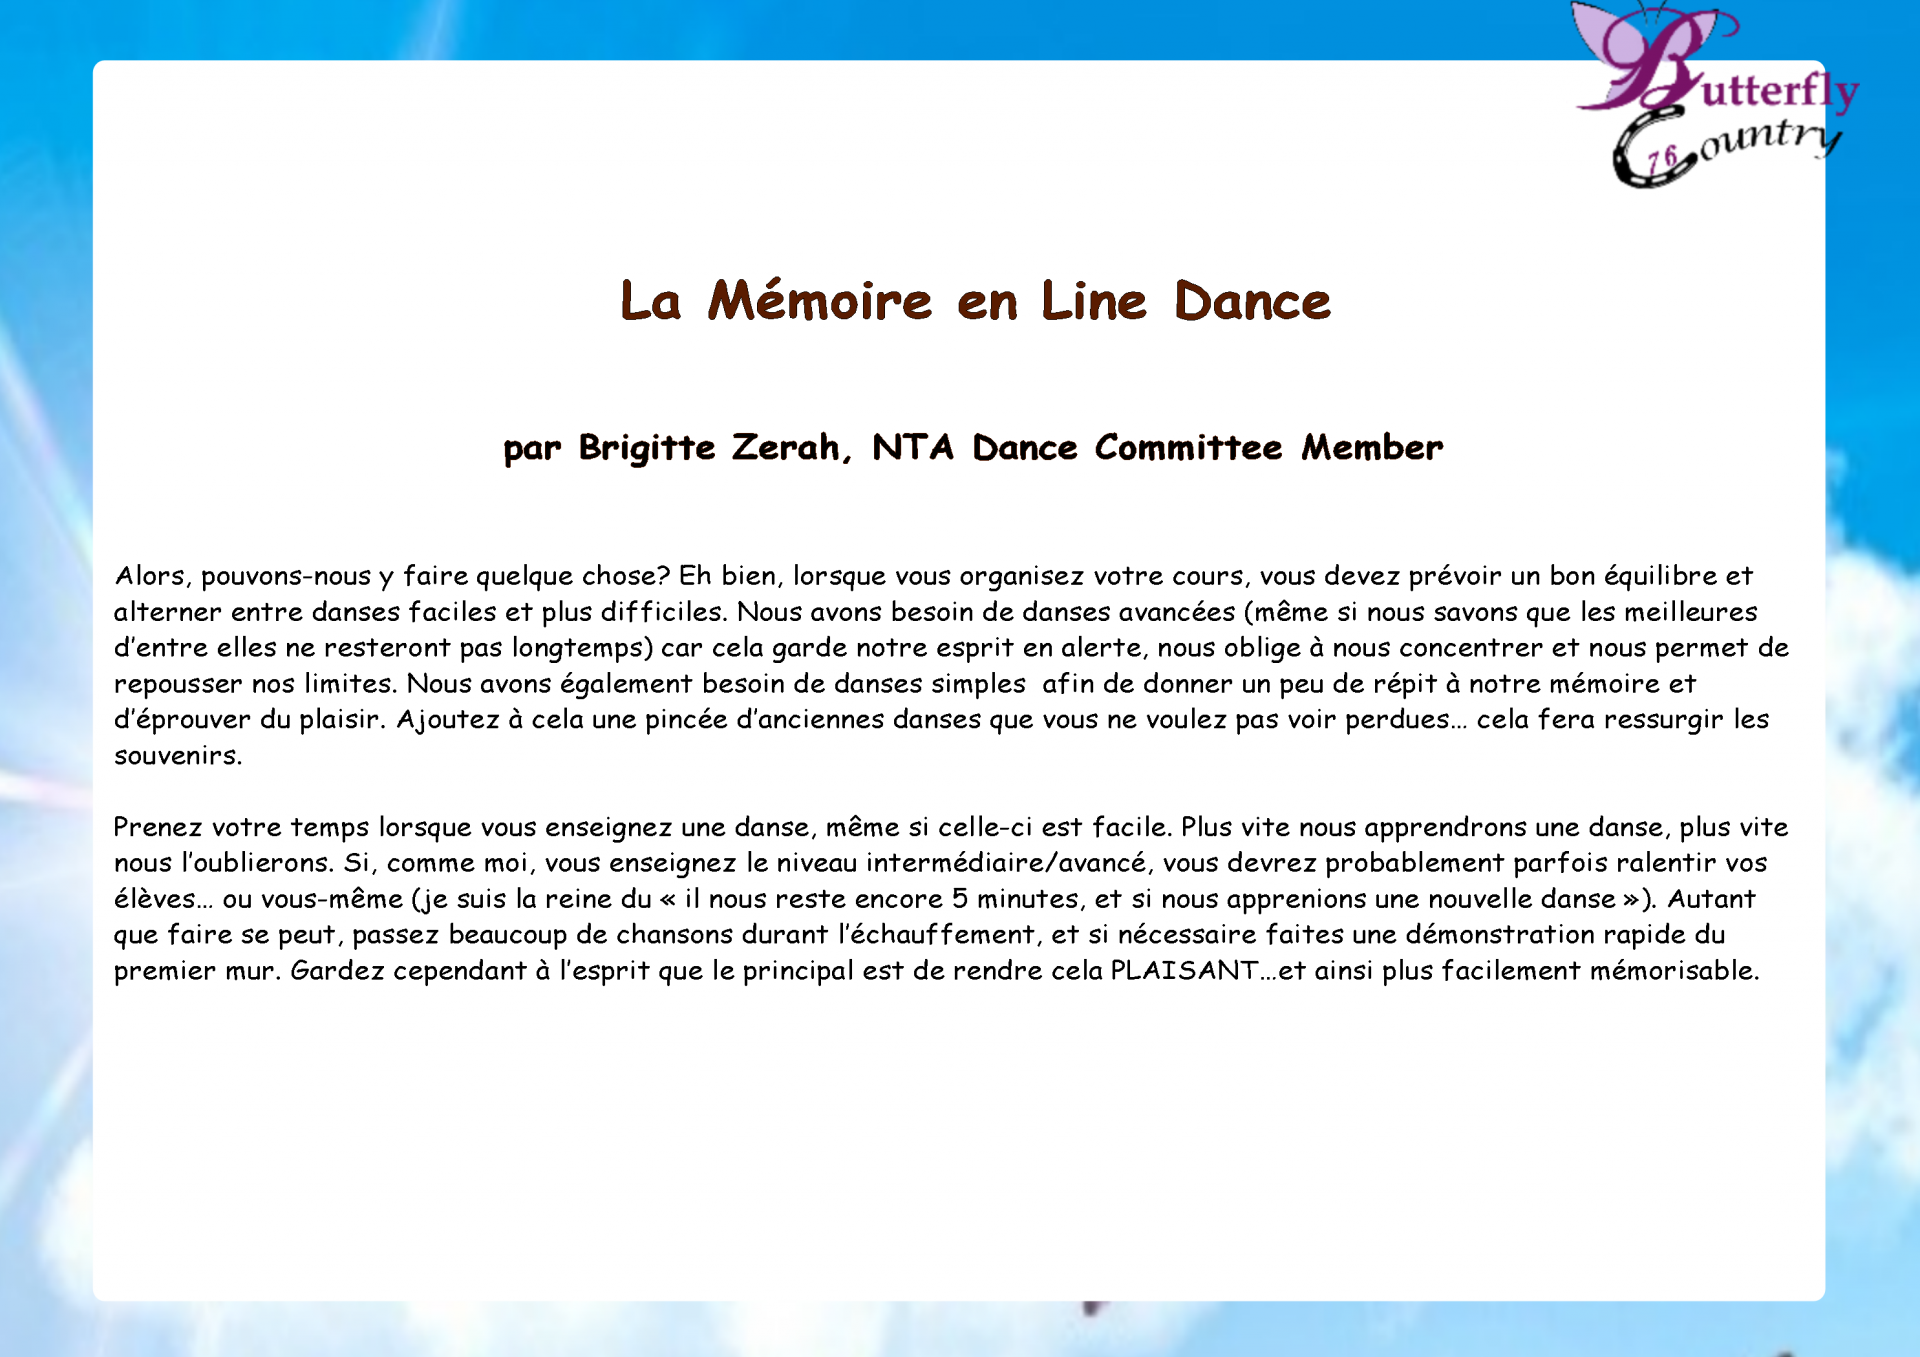 La memoire en line dance 2